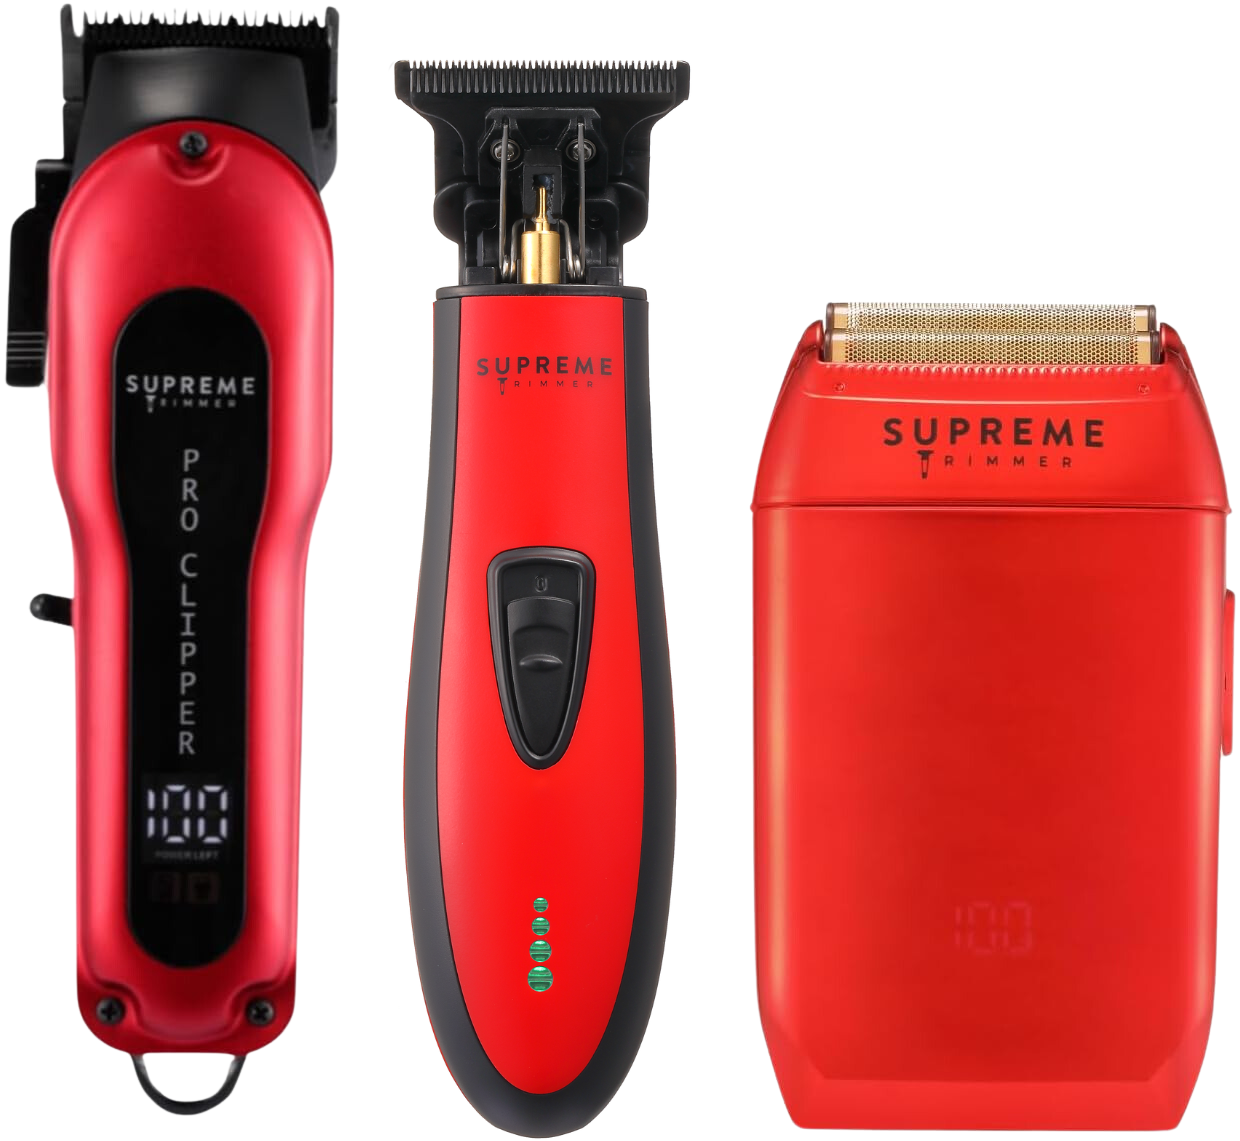 3-in-1 Starter Set - Hair Trimmer, Clipper, and Shaver - Supreme Trimmer Mens Trimmer Grooming kit 